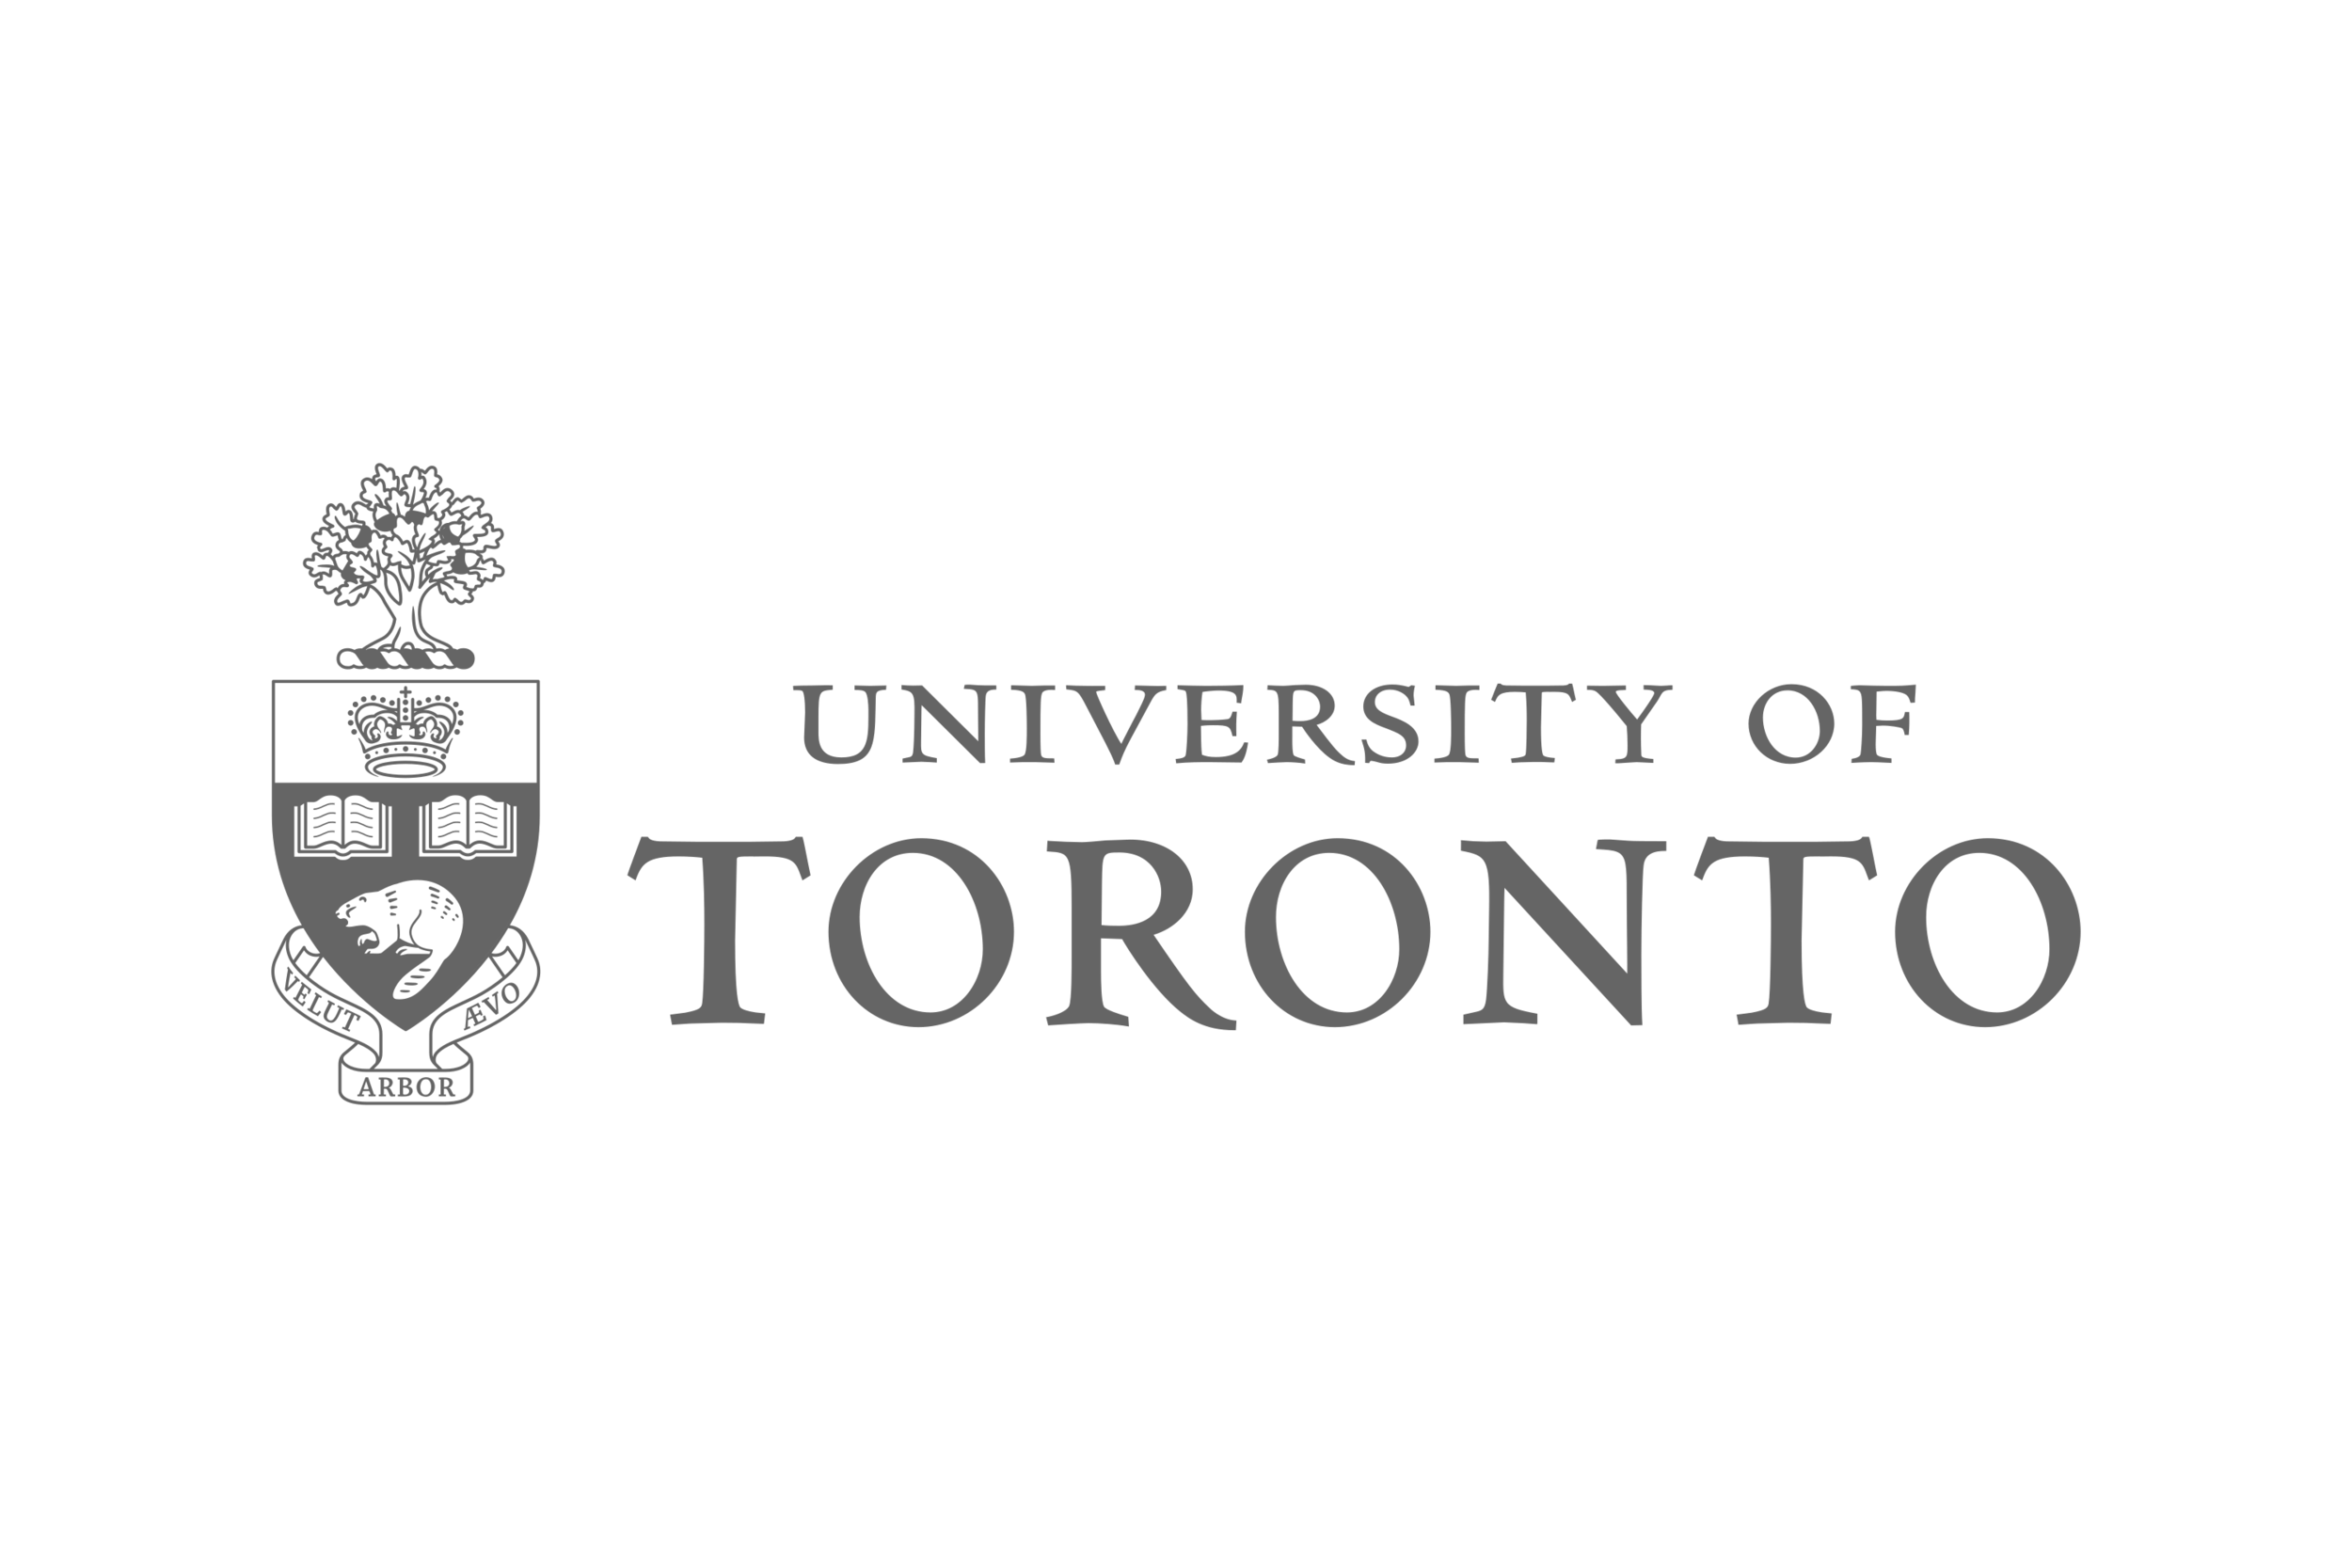 University of Toronto BW.png